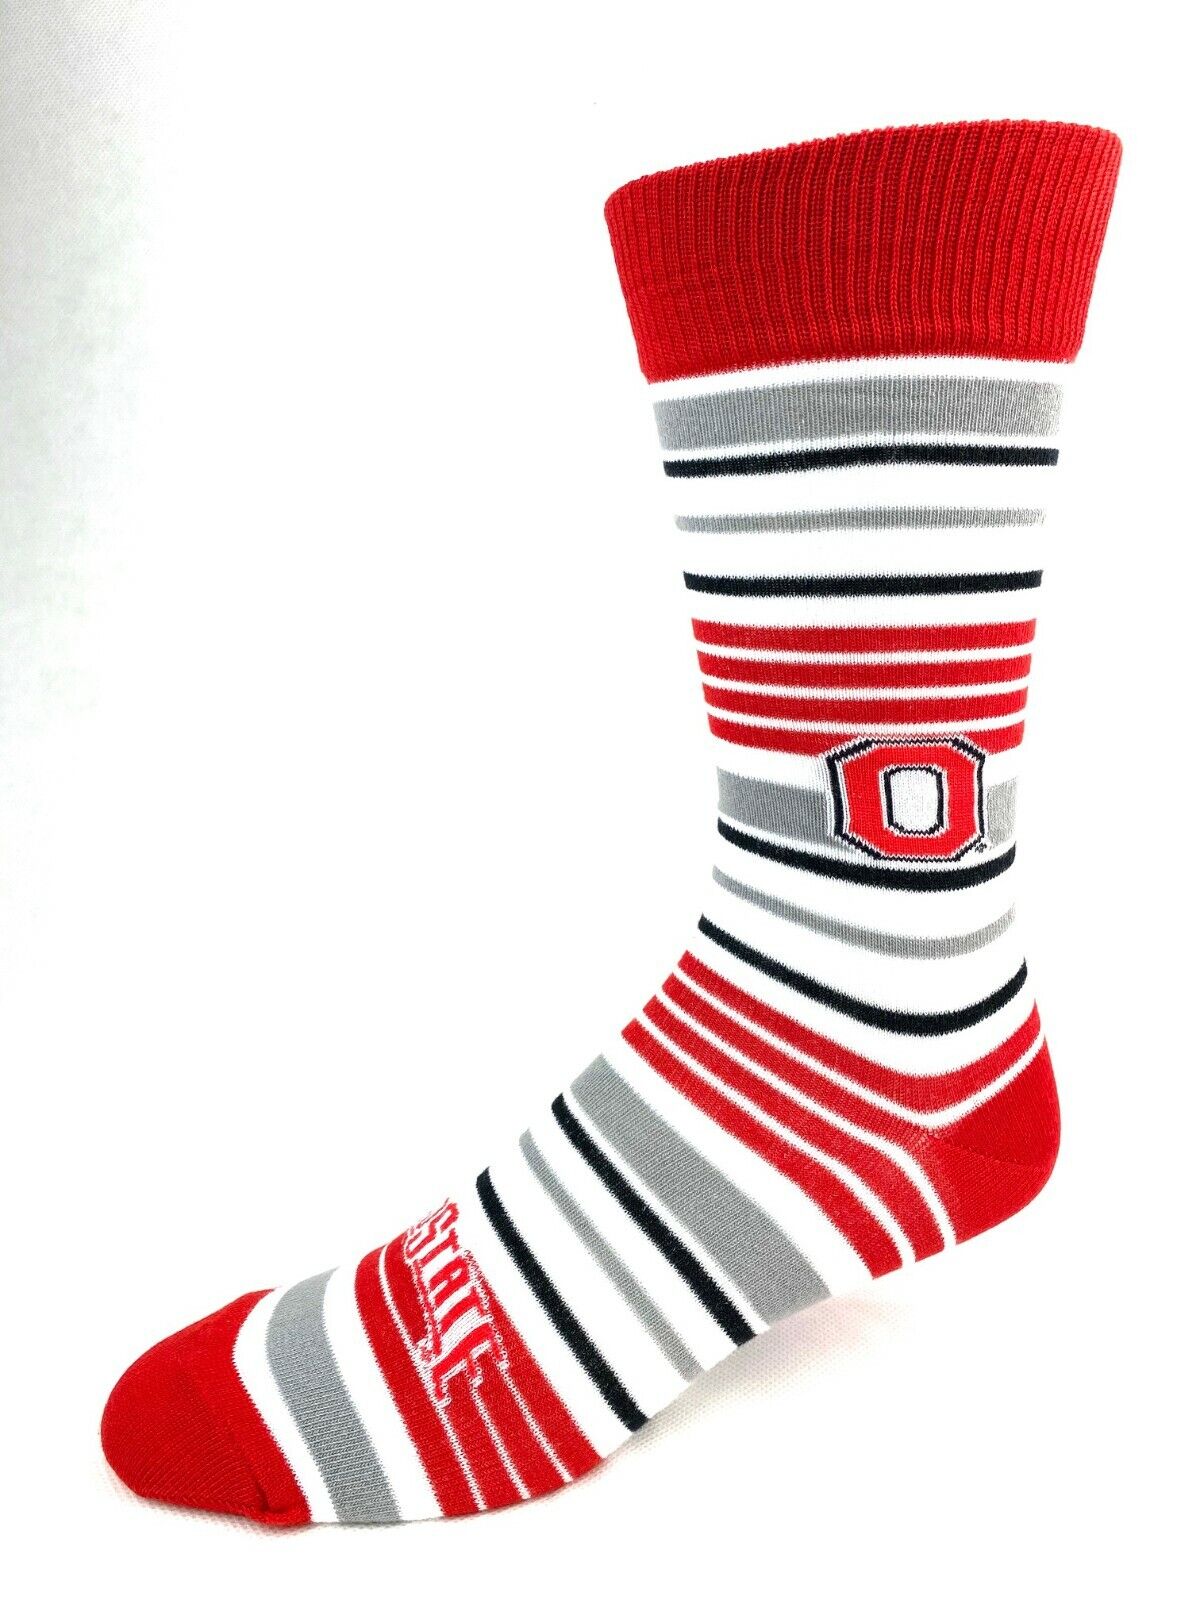 Ohio State Buckeyes Red White & Gray Striped Crew Socks | eBay